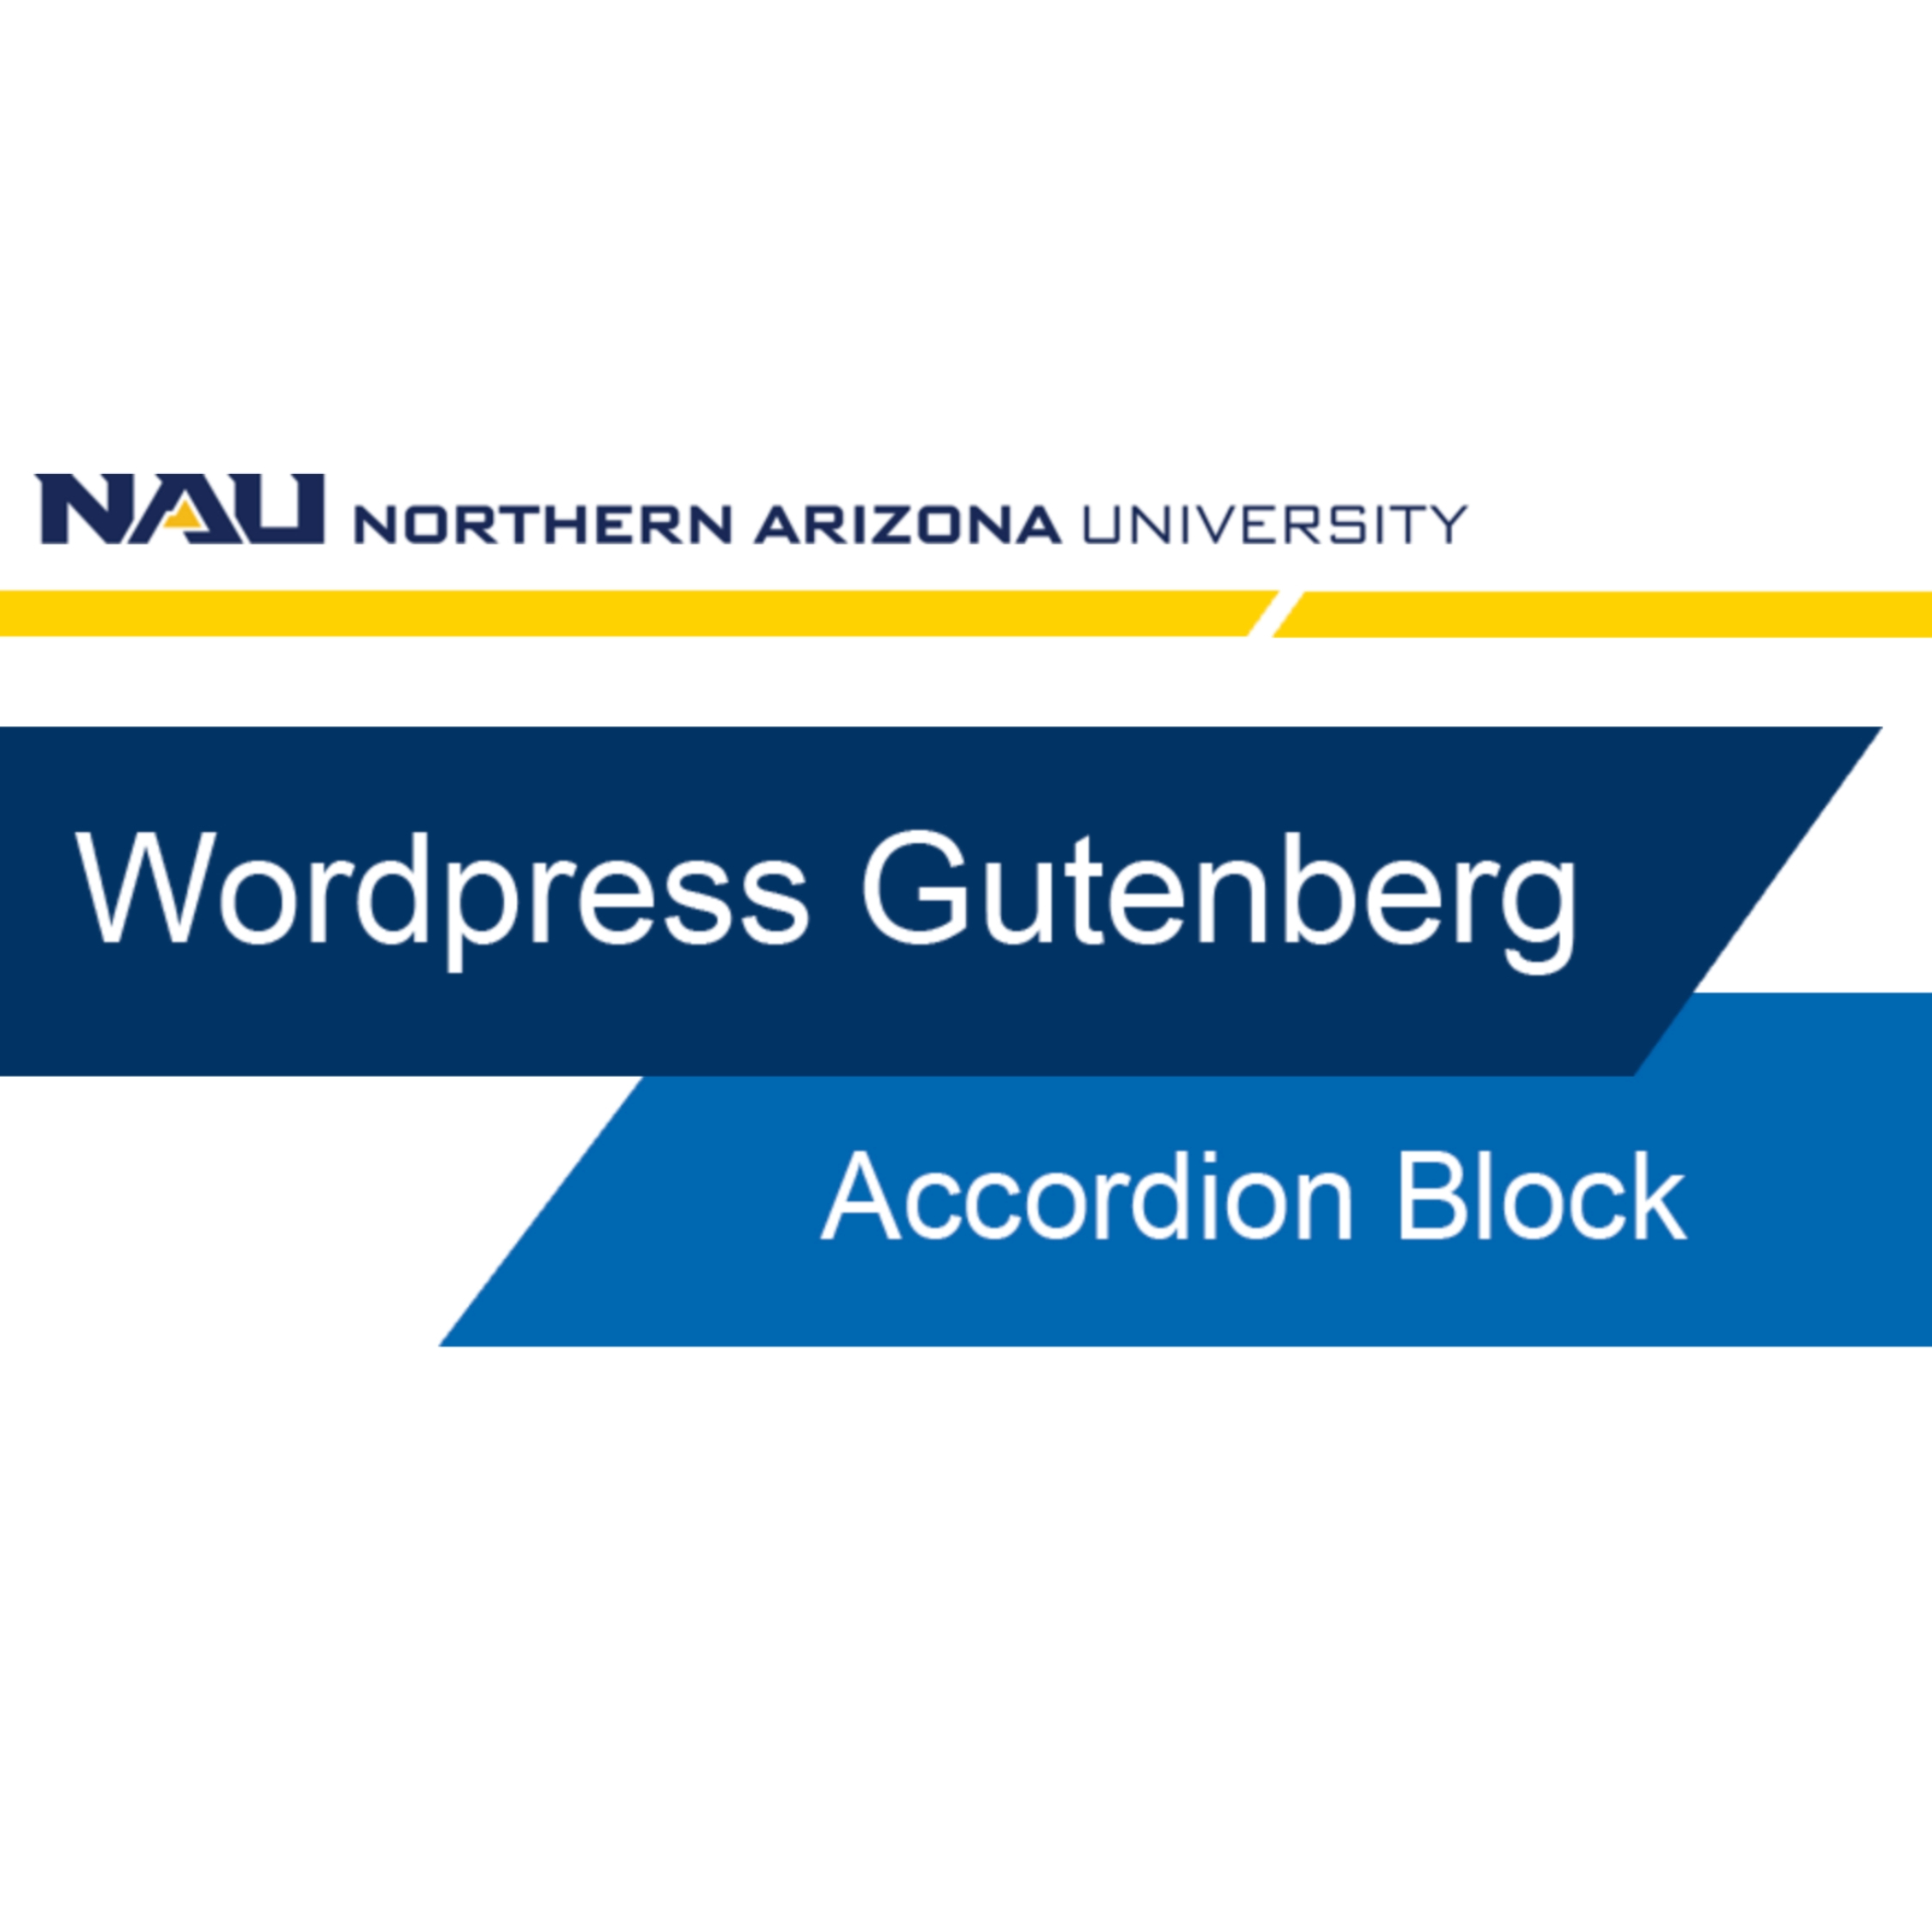 Thumbnail image of the Northern Arizona University WordPress Gutenberg tutorial start page, titled 'Accordion Block'.